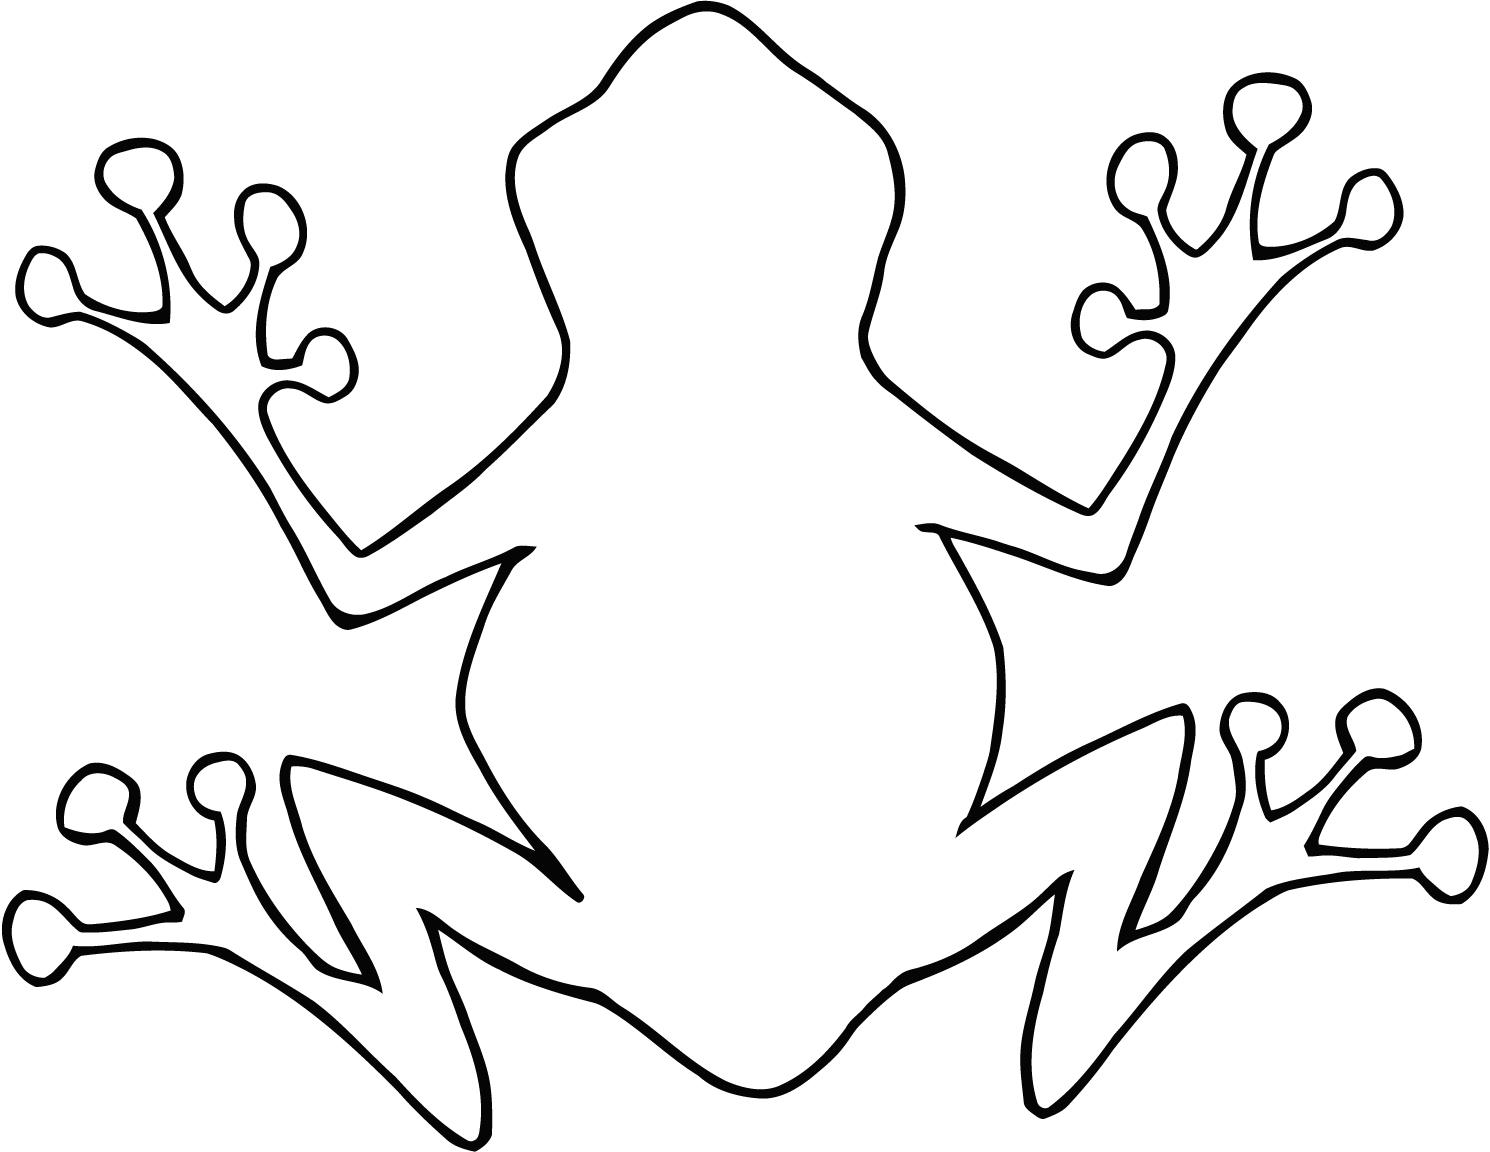 Pix For > Tree Frog Outline